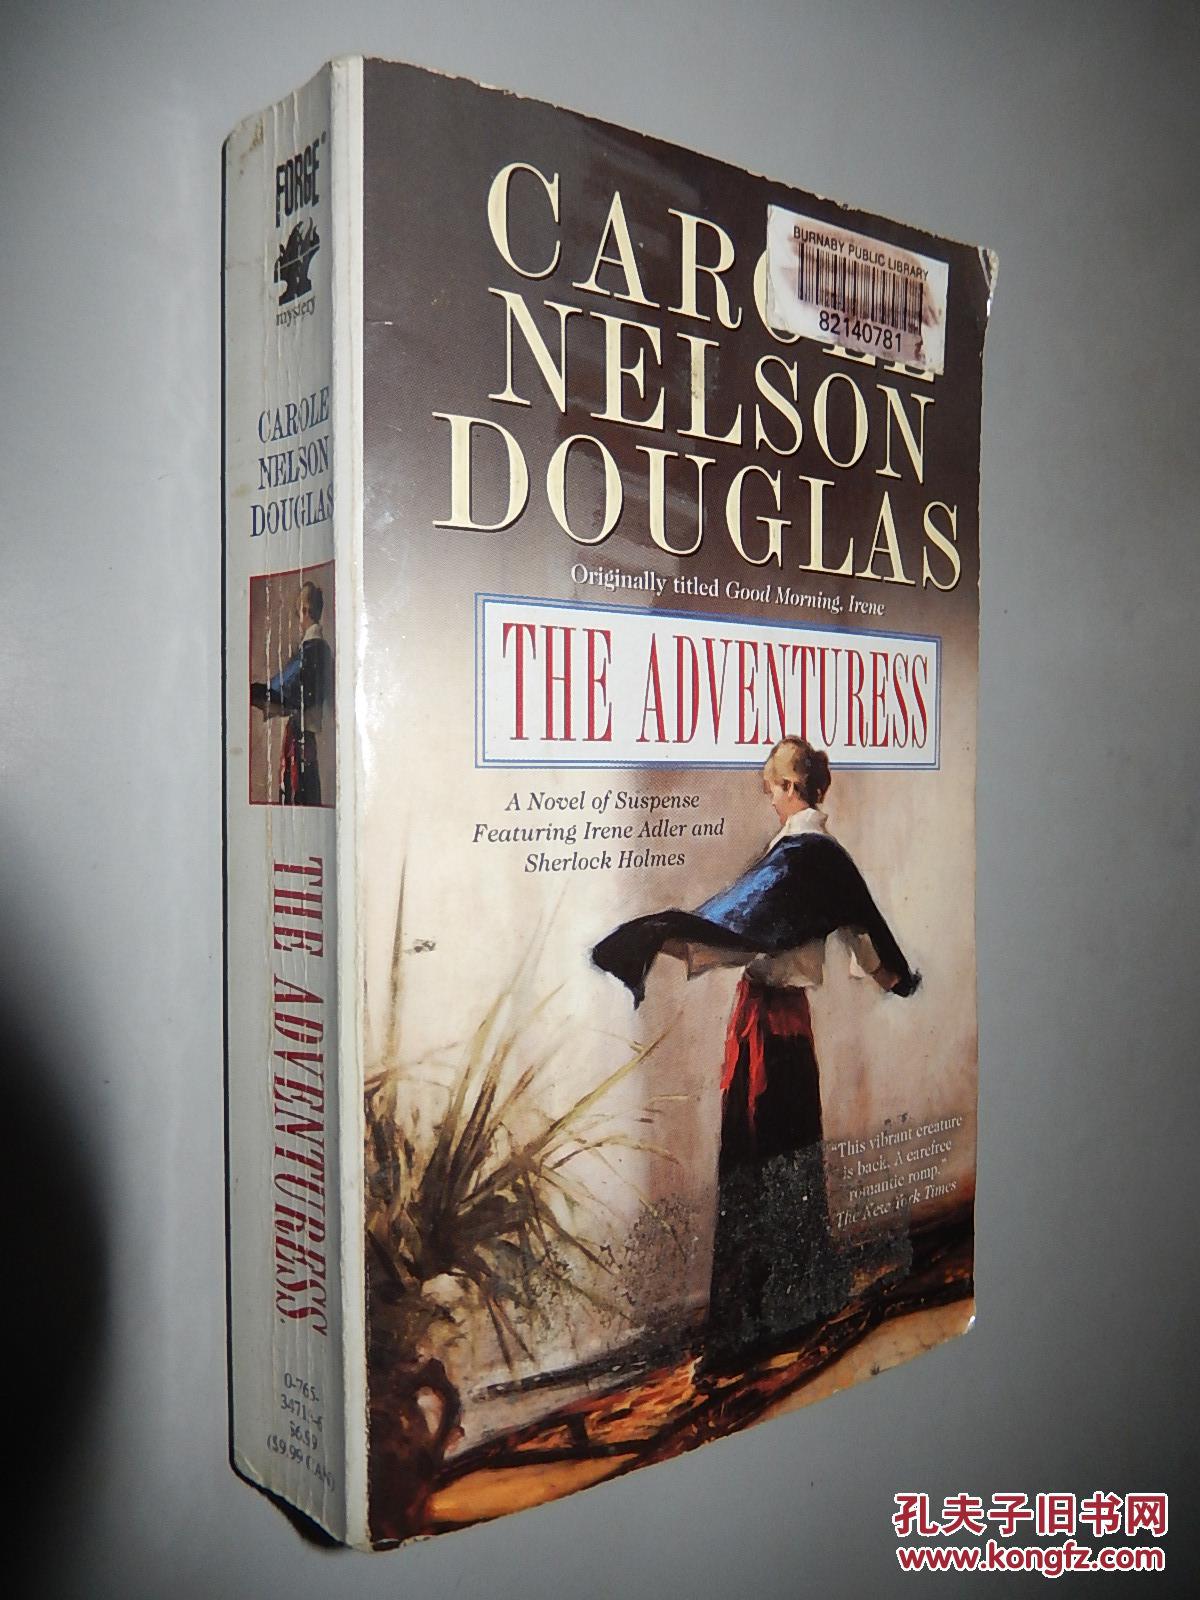 The Adventuress by Carole Nelson Douglas 英文原版